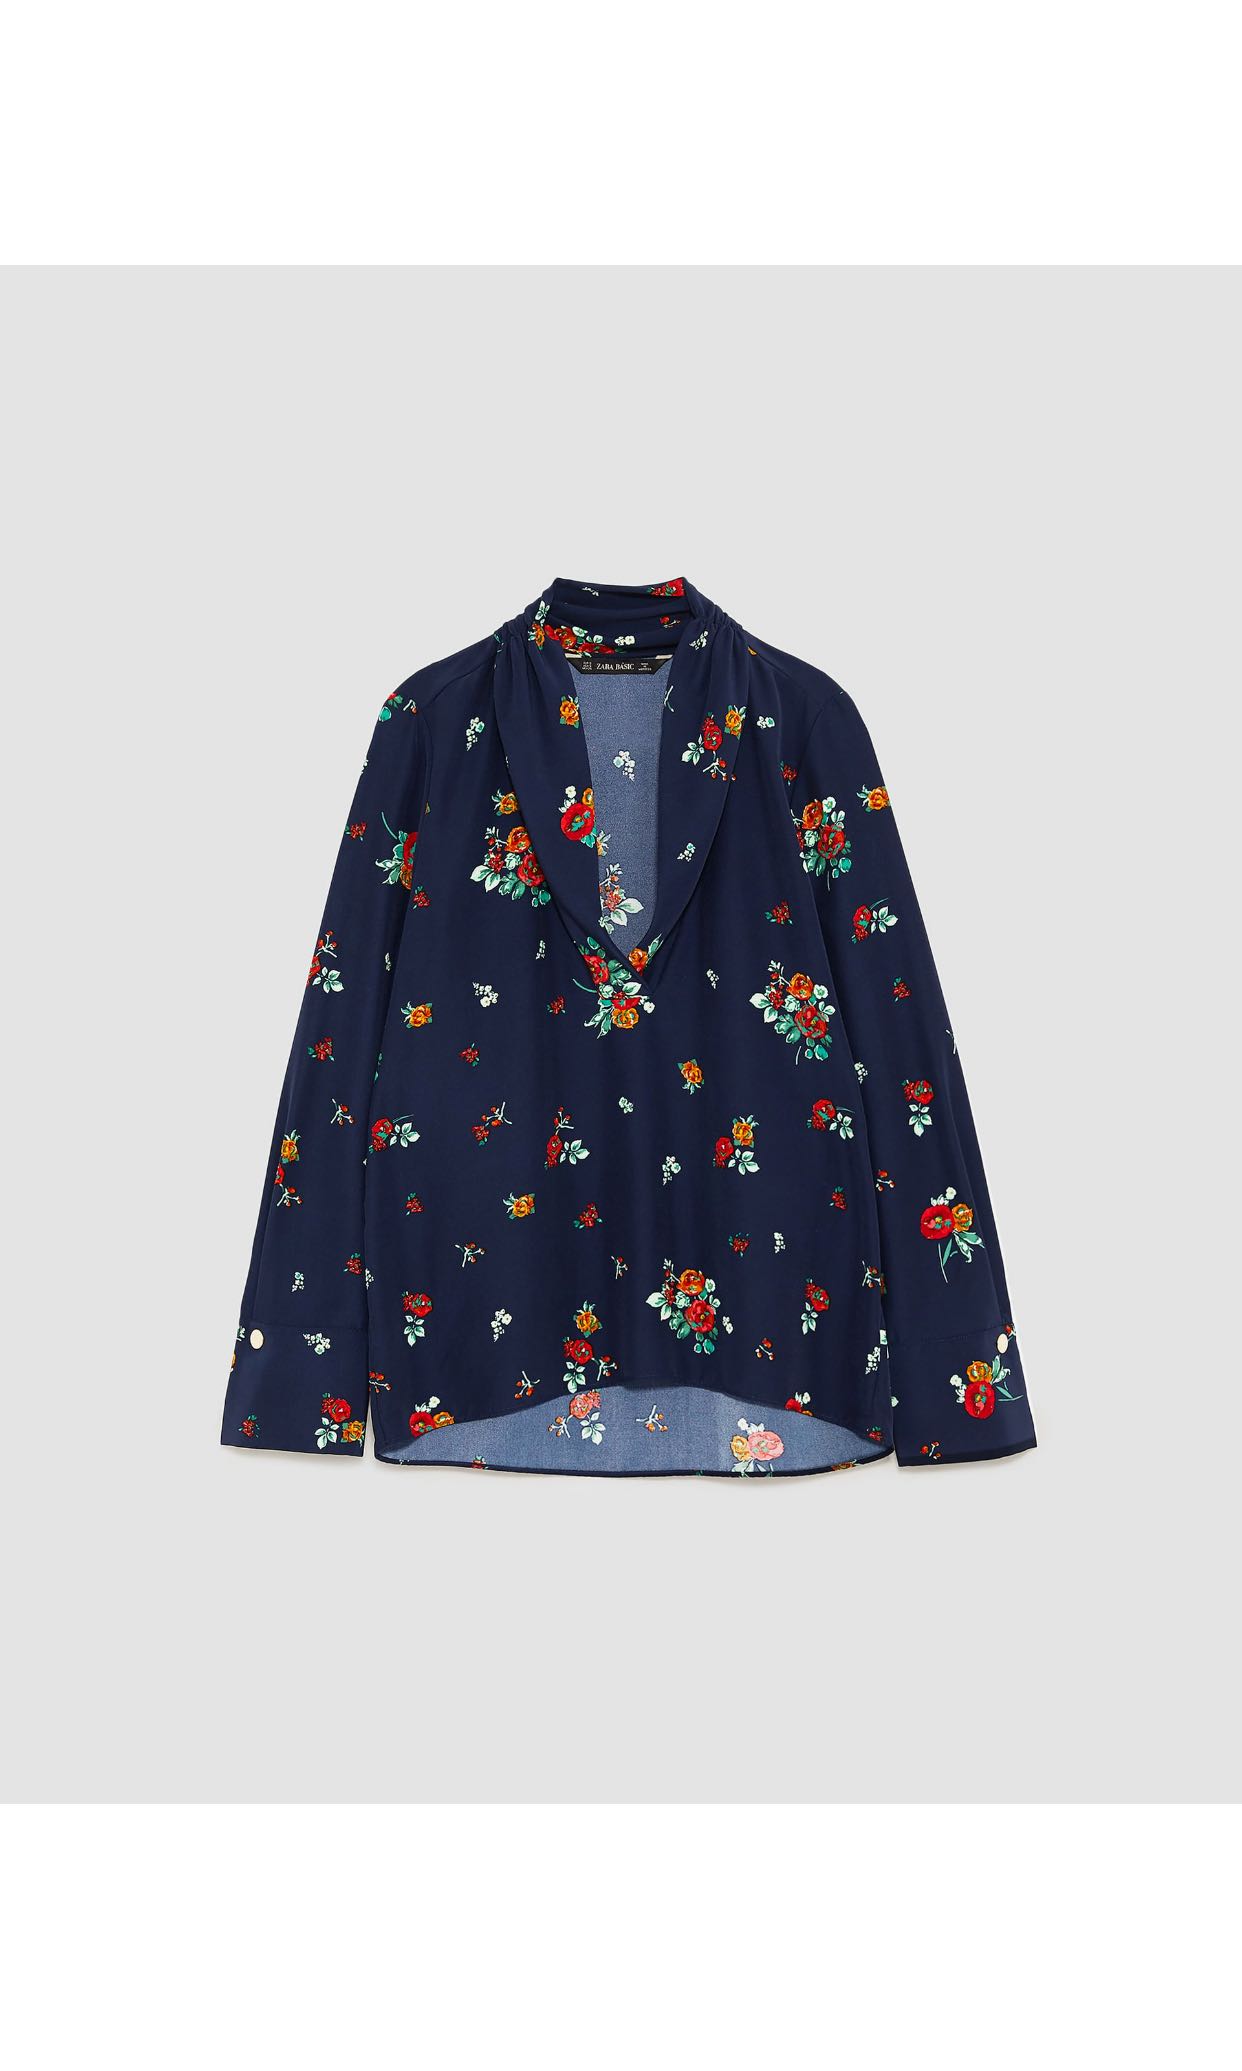 zara printed floral shirt